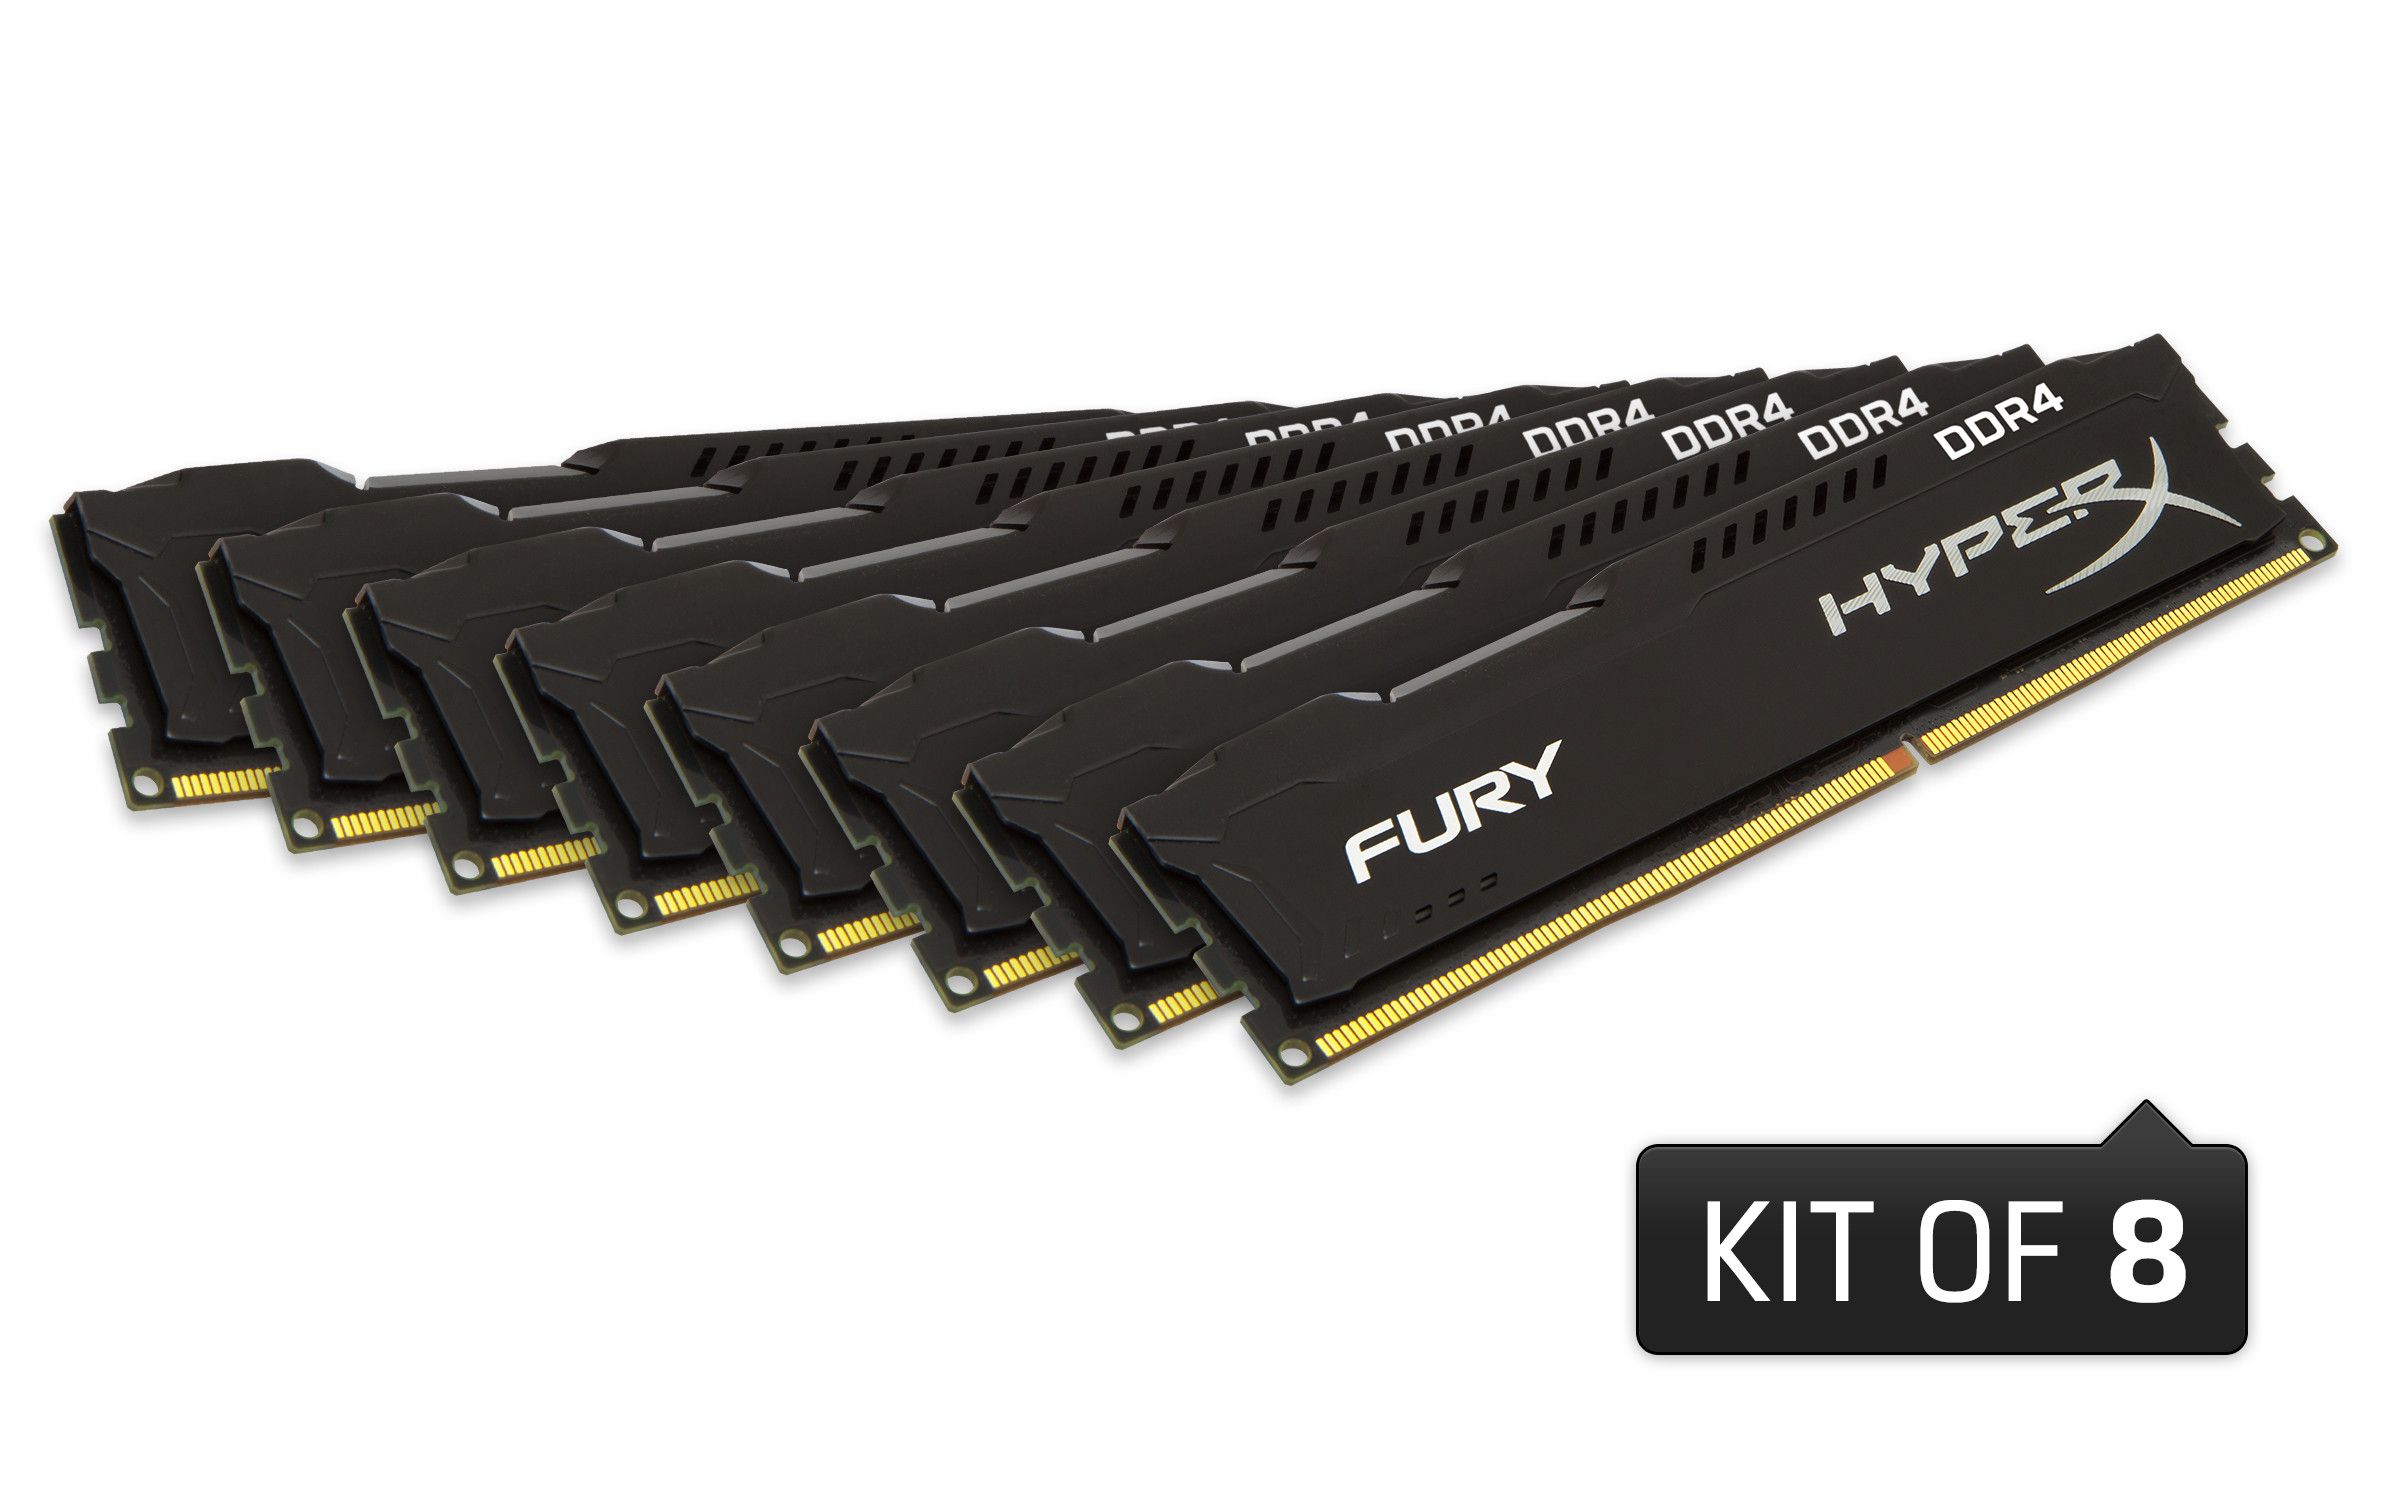 HyperX FURY DDR4 kit of 8